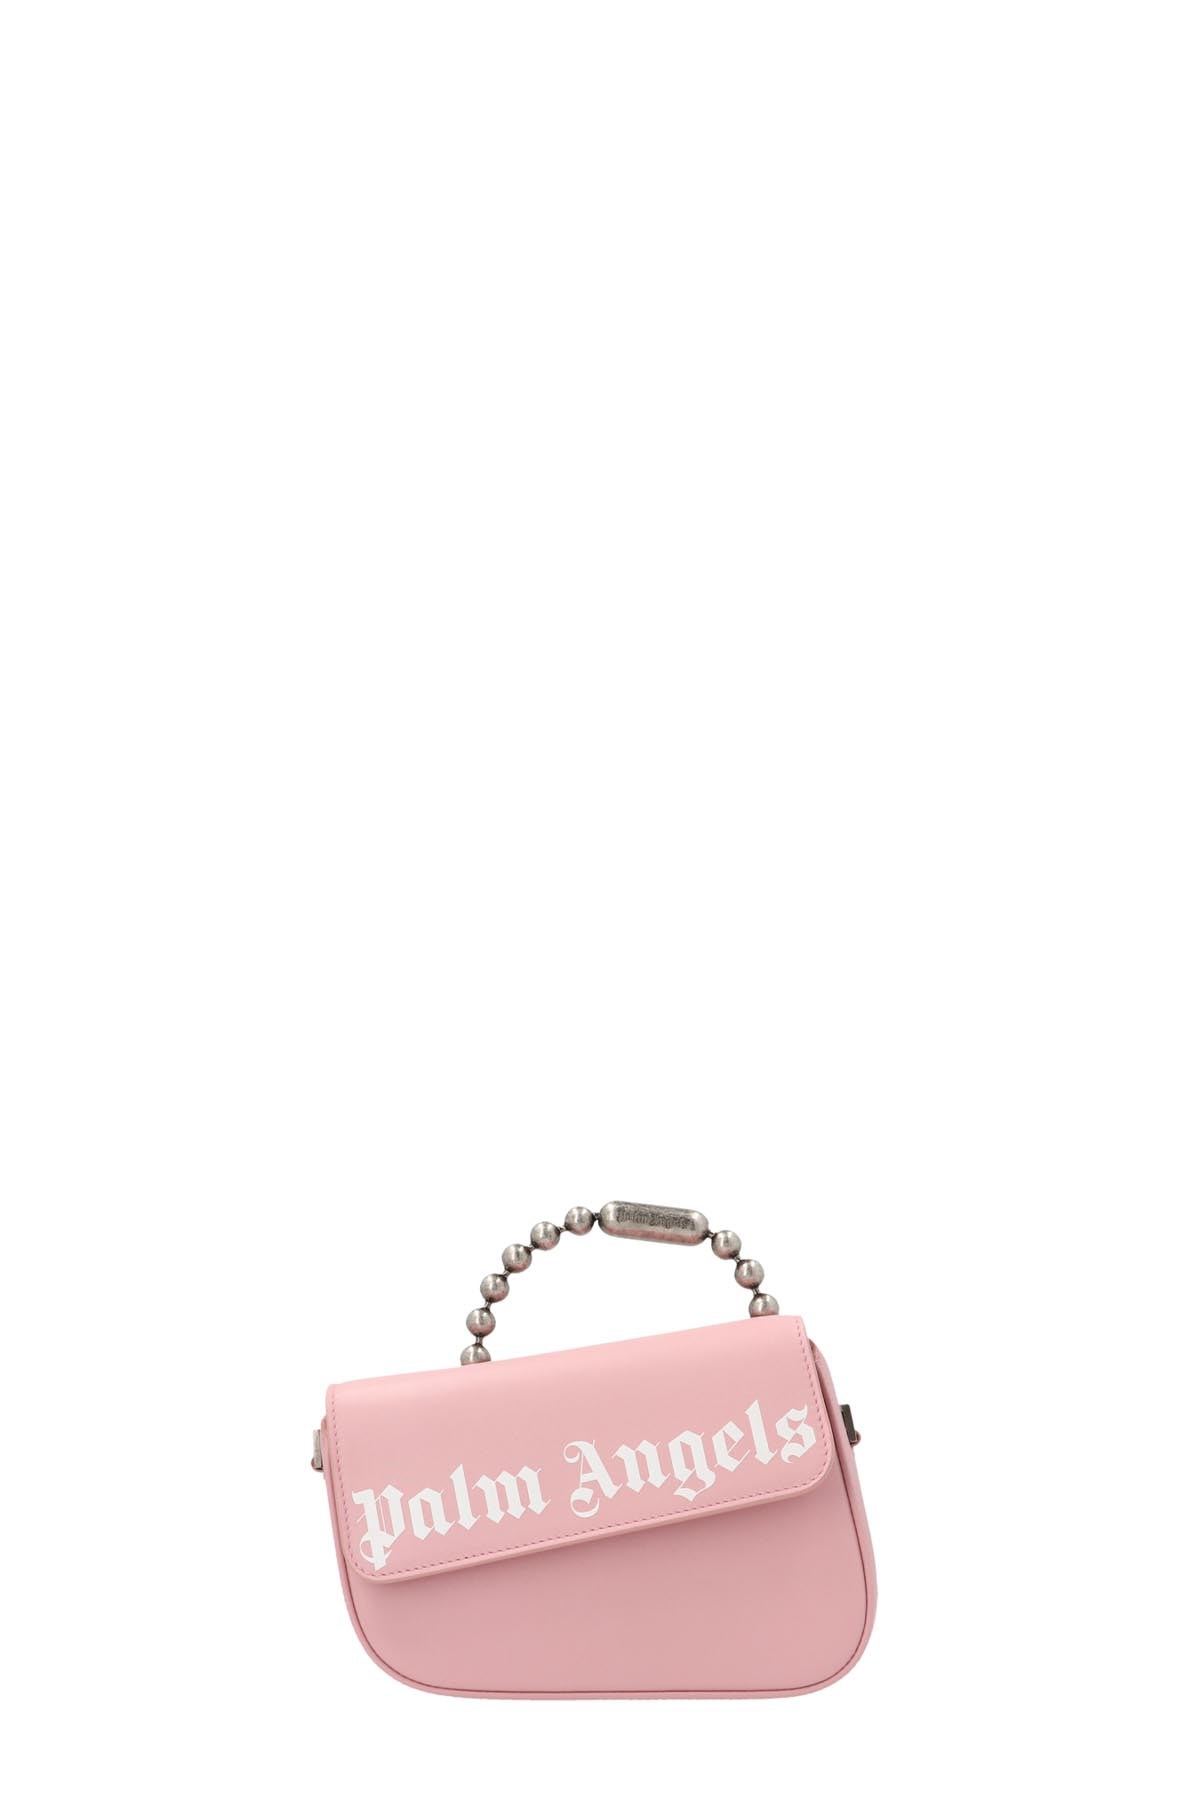 PALM ANGELS 'Crash’ Handbag